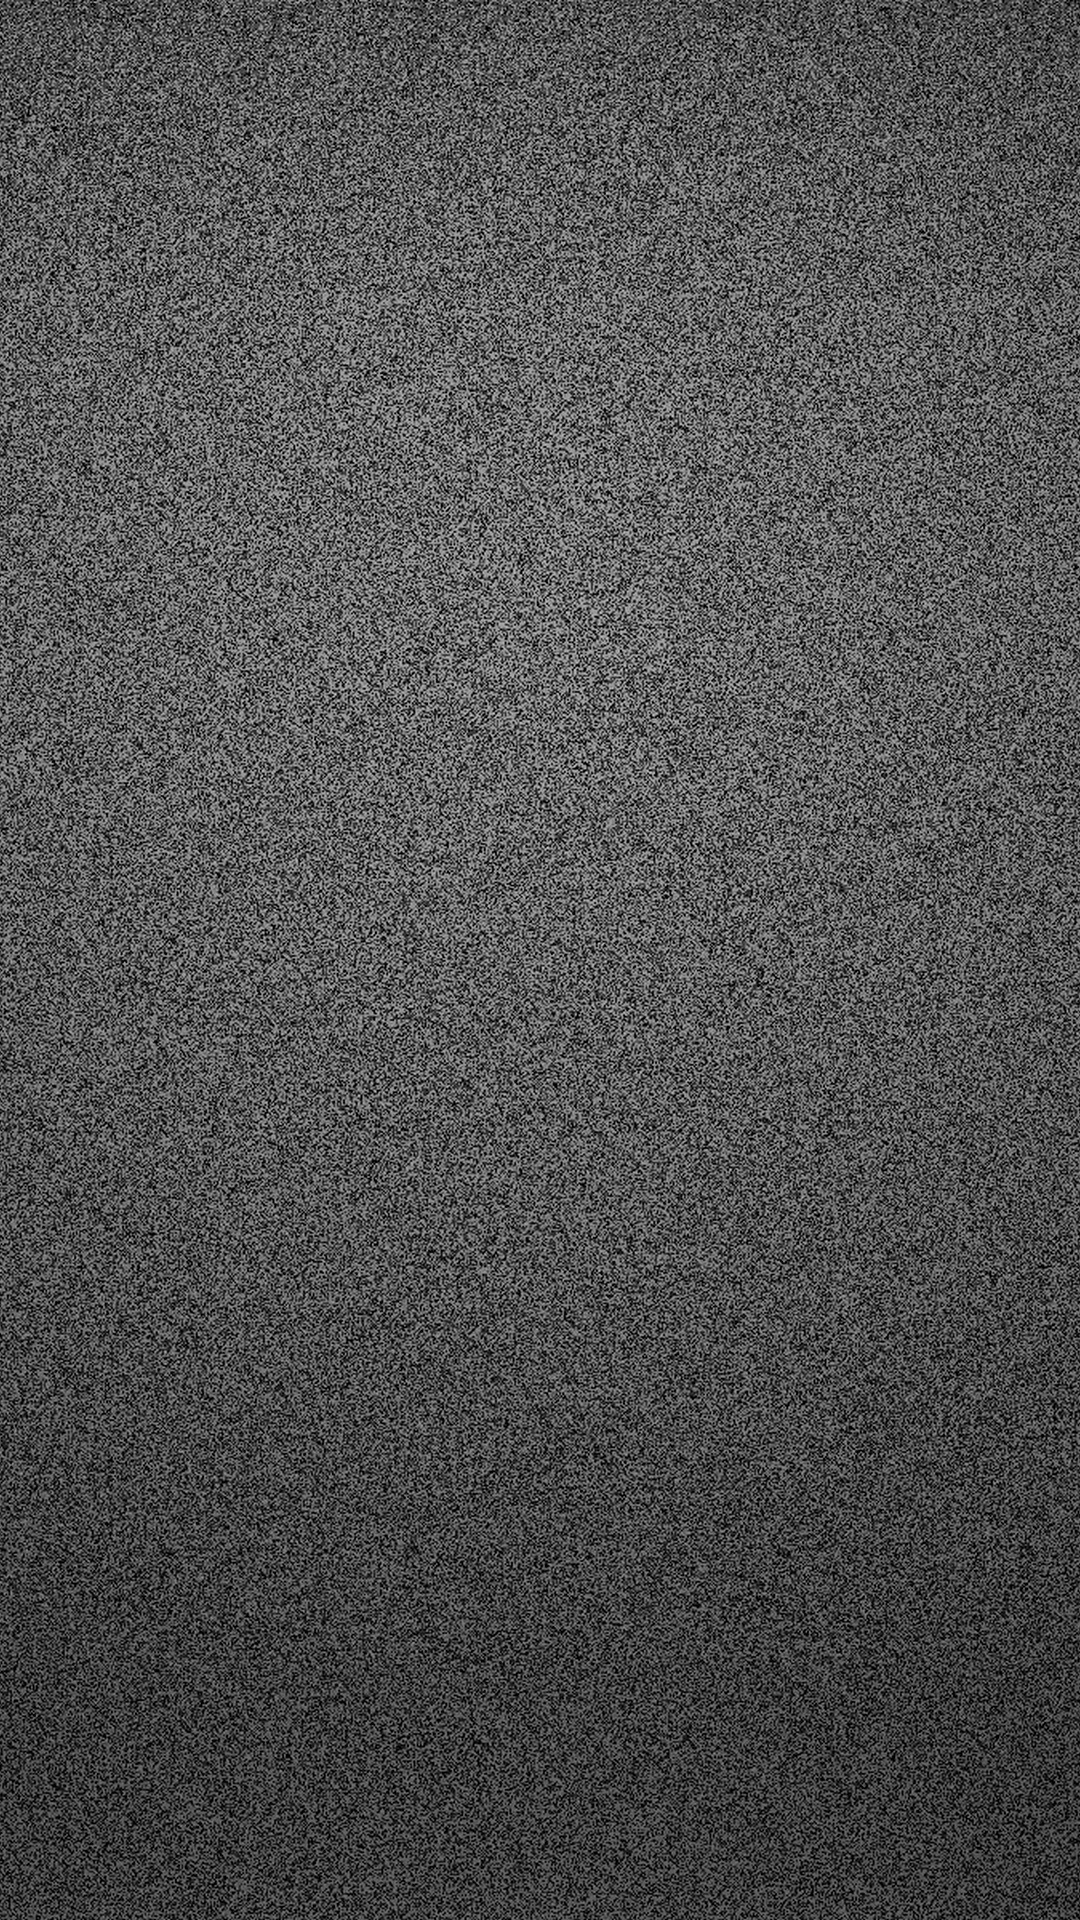 Gray Slate: Noise texture, Black, Shades, Monochrome. 1080x1920 Full HD Wallpaper.